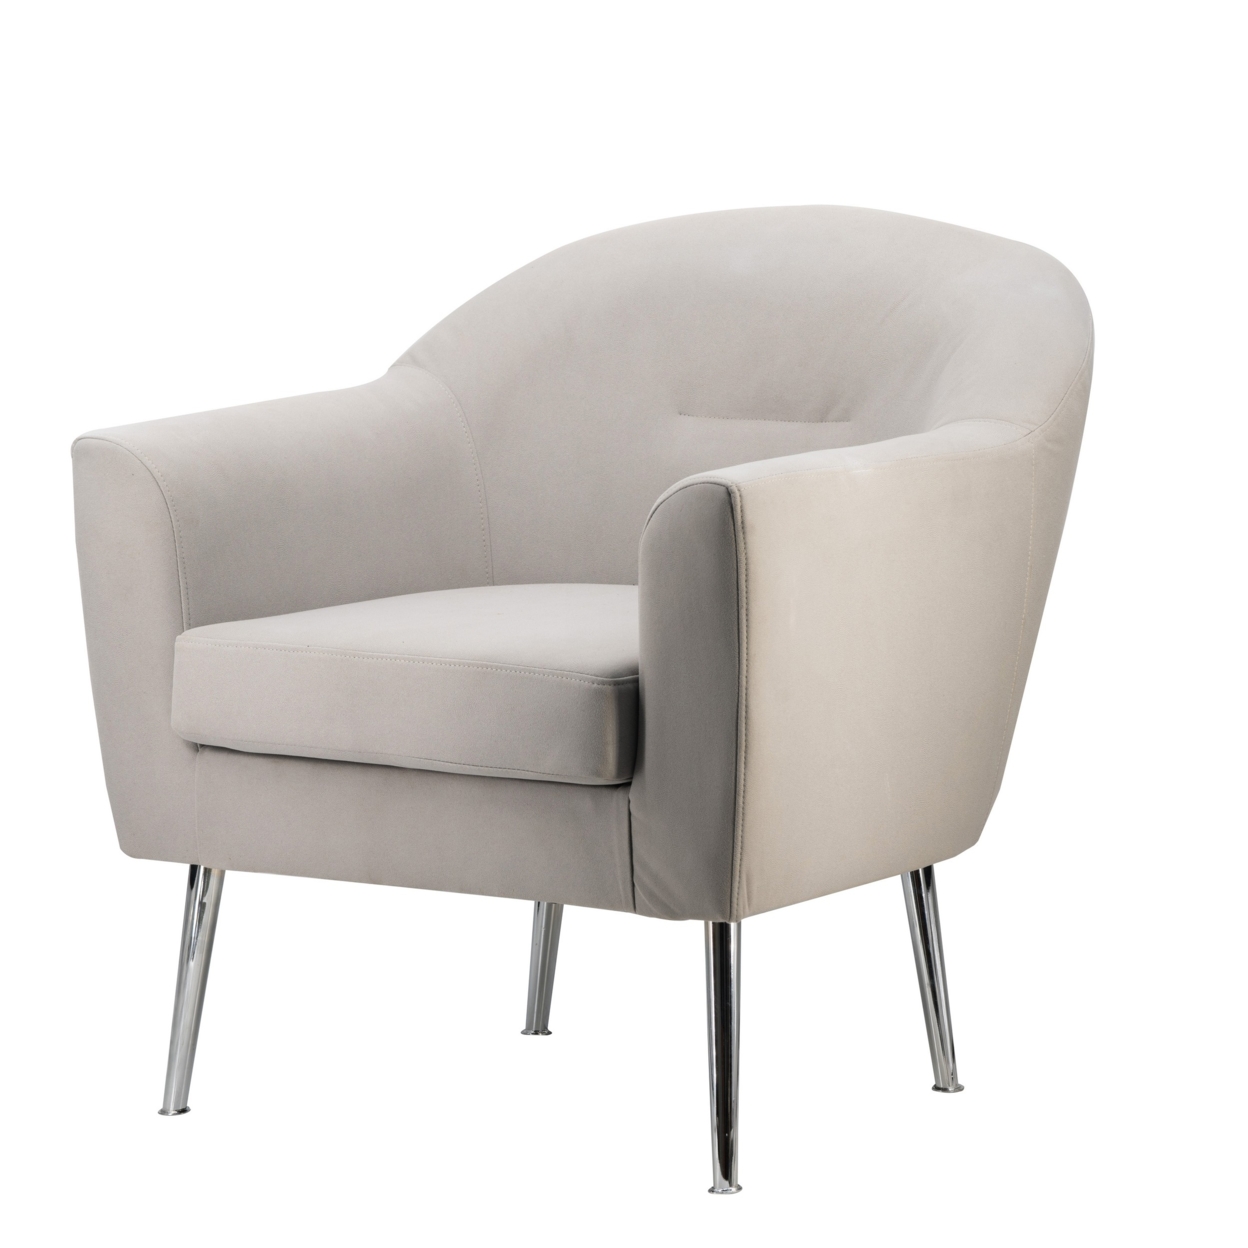 30 Inch Modern Accent Armchair, Fabric Upholstery, Chrome Metal Legs, Ivory- Saltoro Sherpi